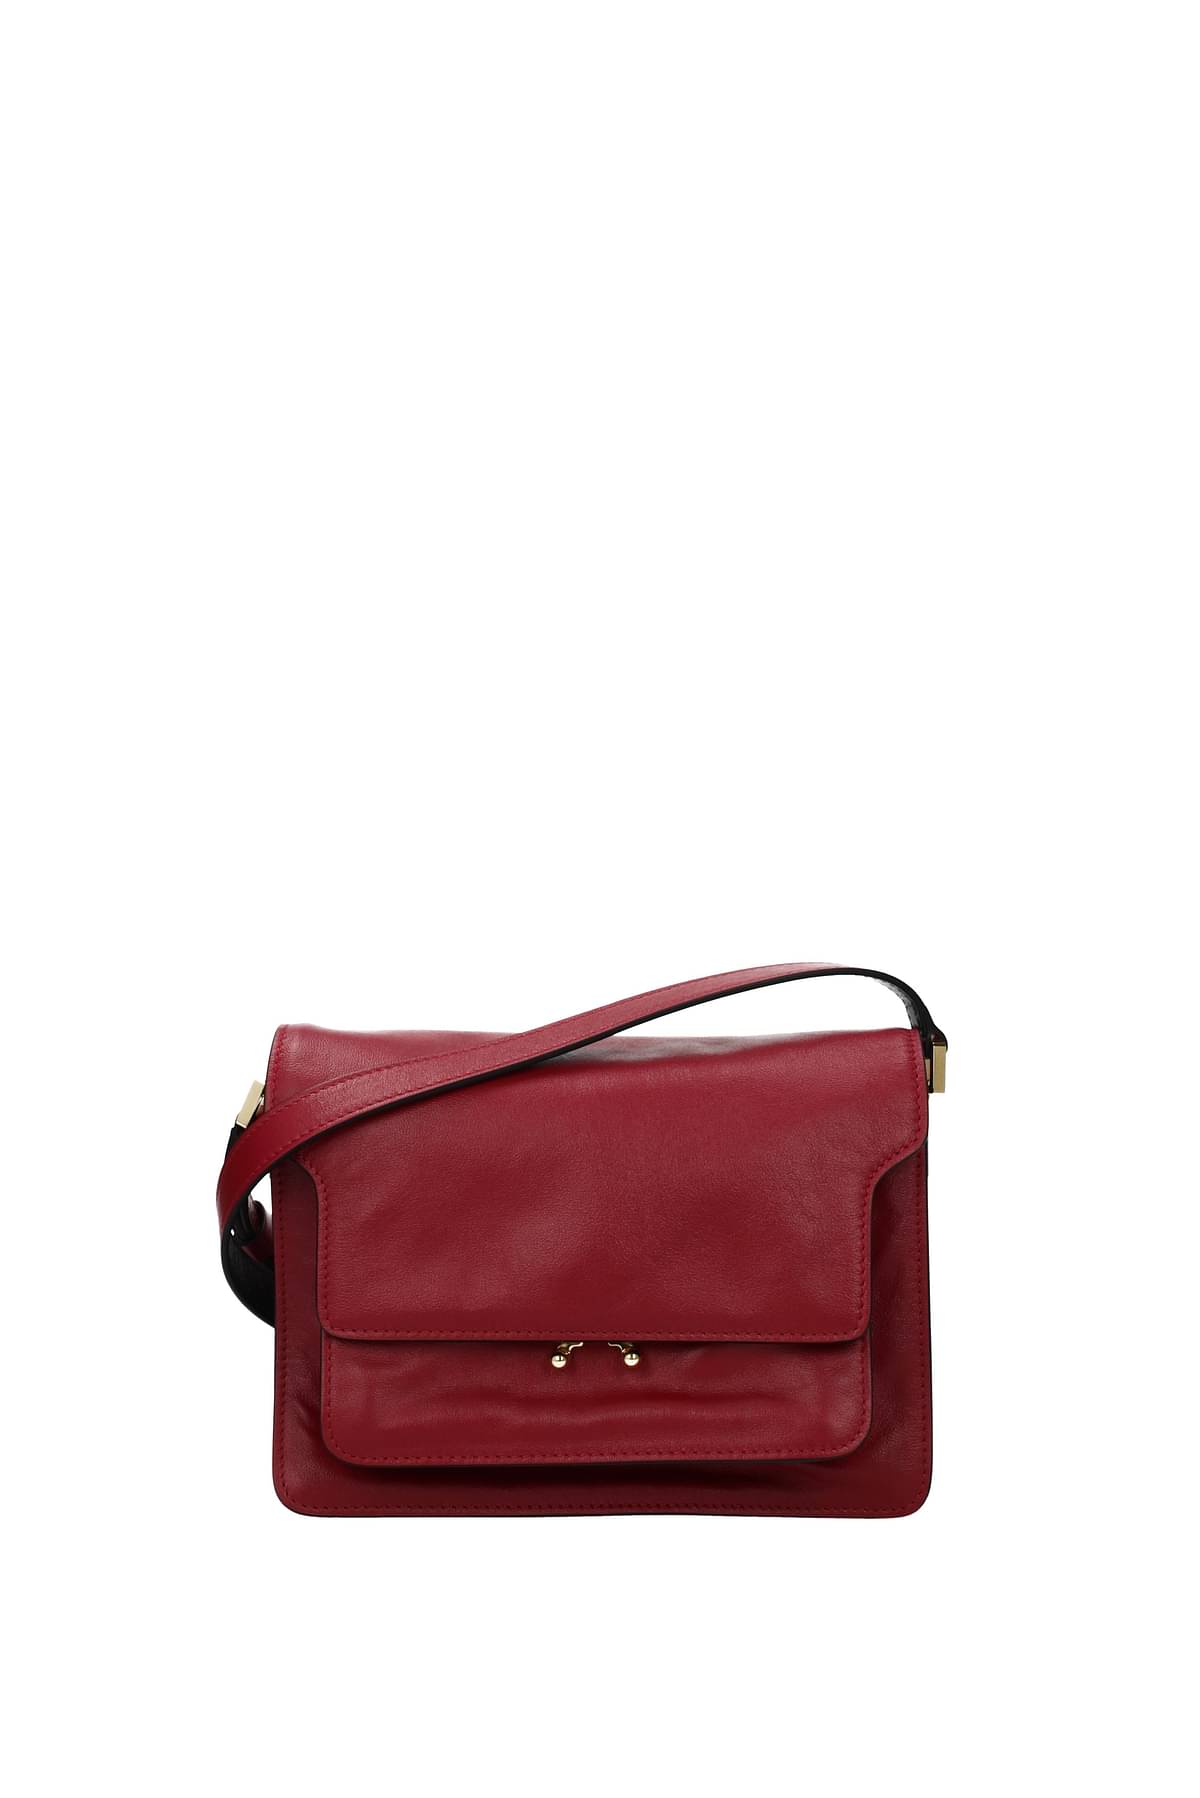 Marni Crossbody Bag Women SBMP0103U3P2644Z581N Leather Red 729,75€